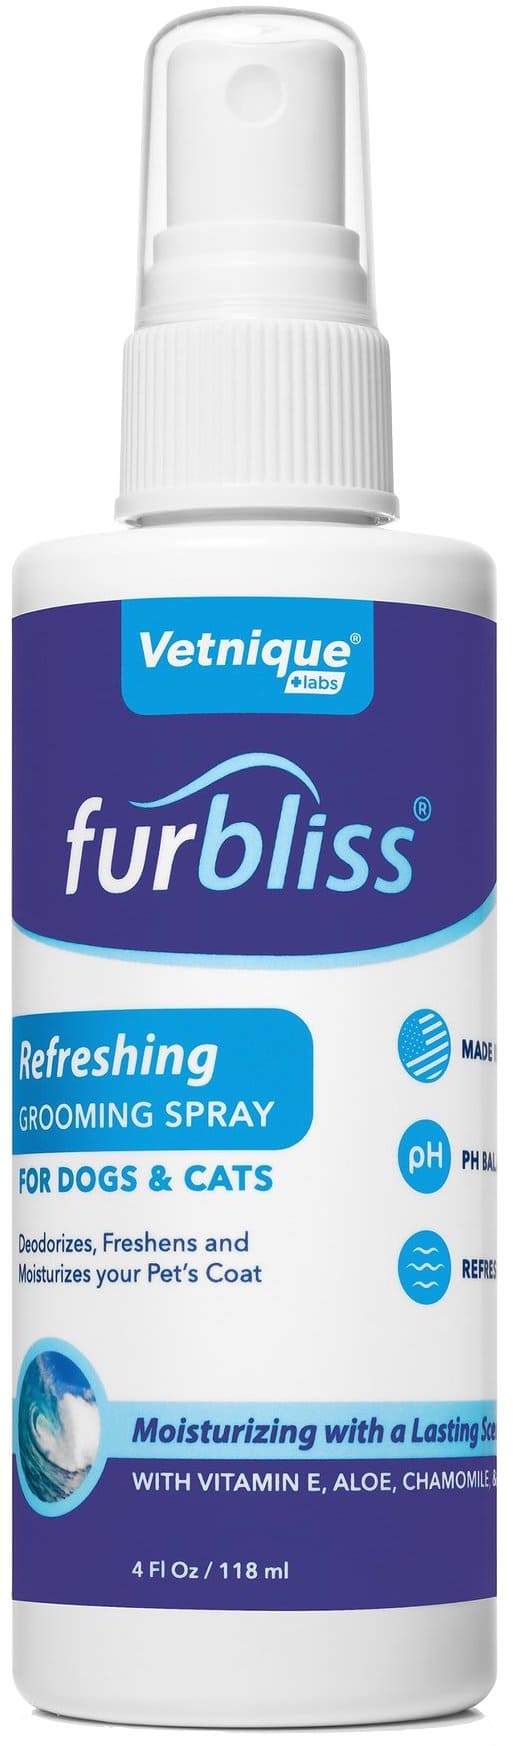 Furbliss Refreshing Grooming Spray 4 oz 1